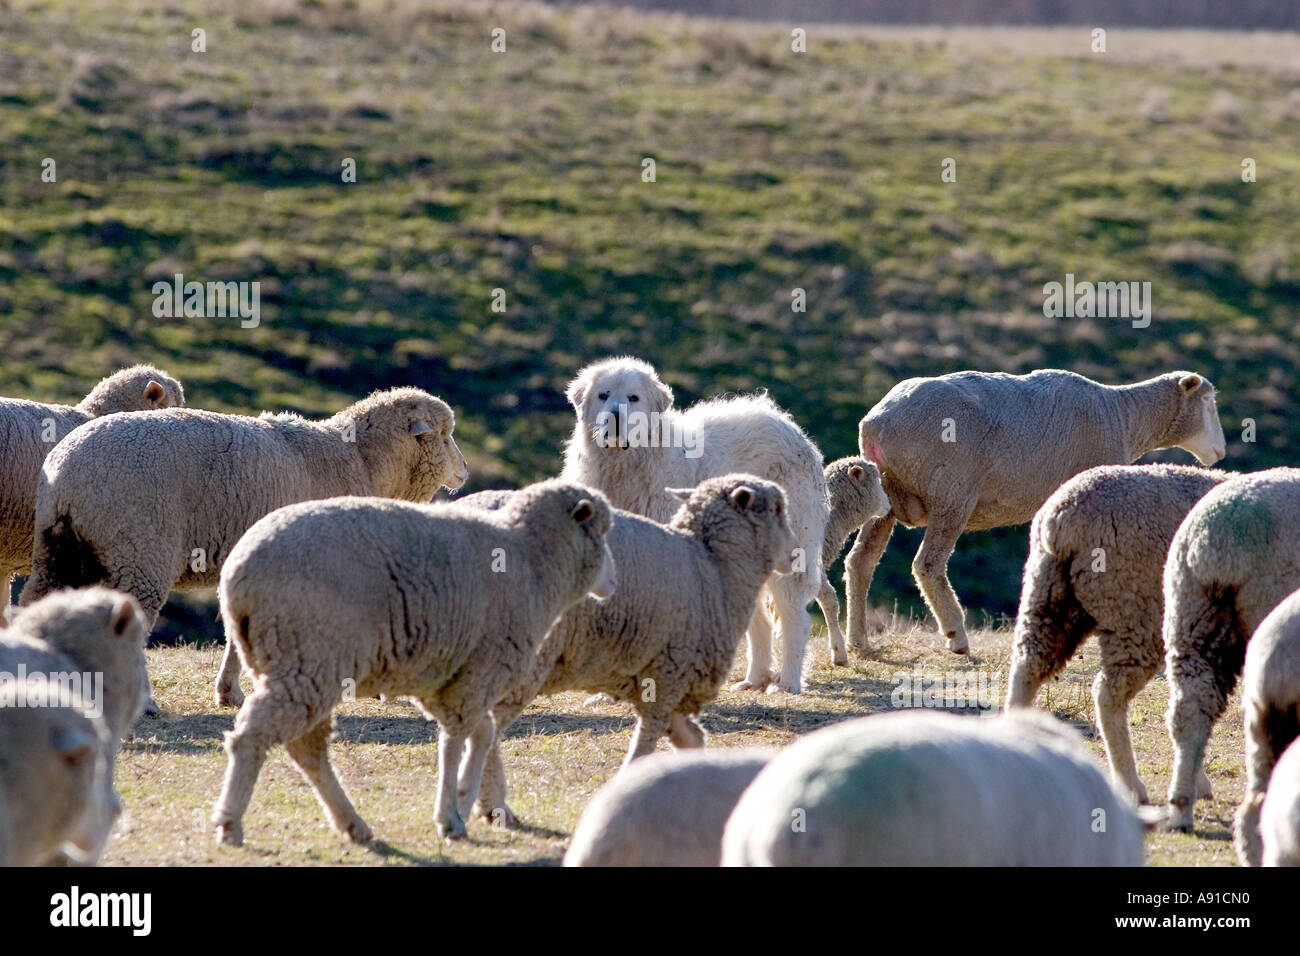 Great Pyrenees dog guarding sheep near Emmett, Idaho Stock Photo - Alamy